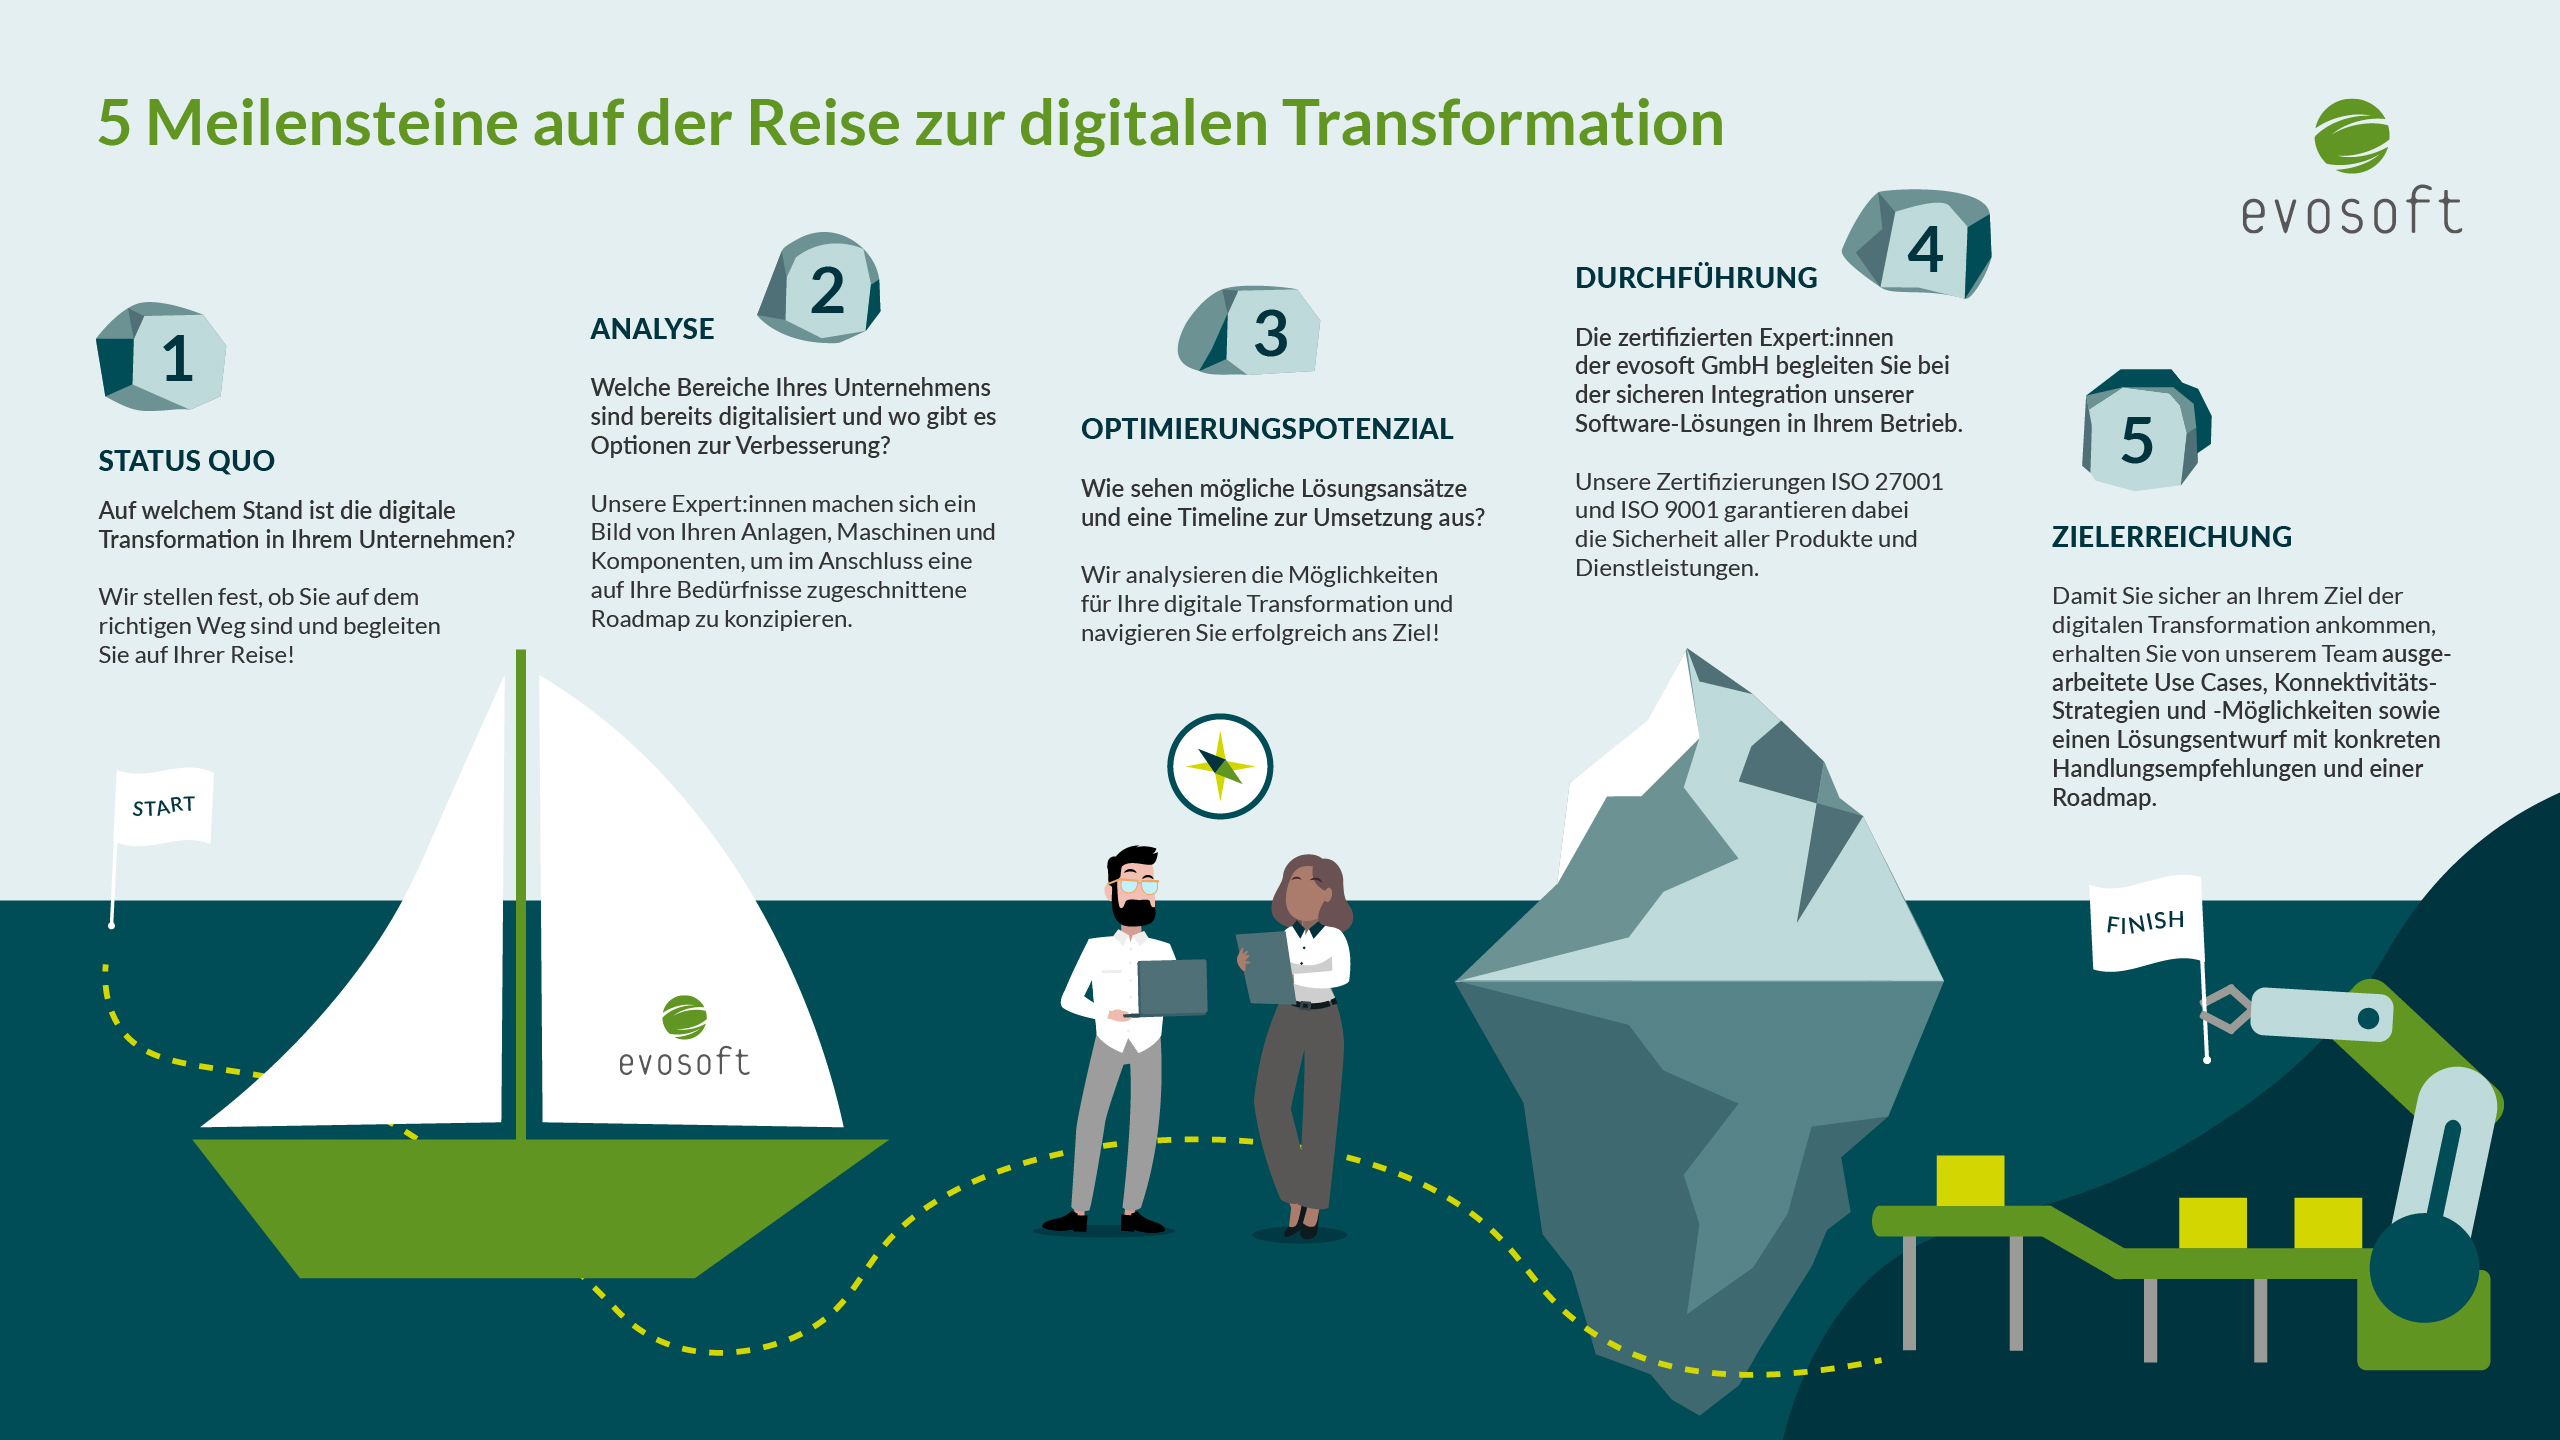 5 milestones on the journey to digital transformation